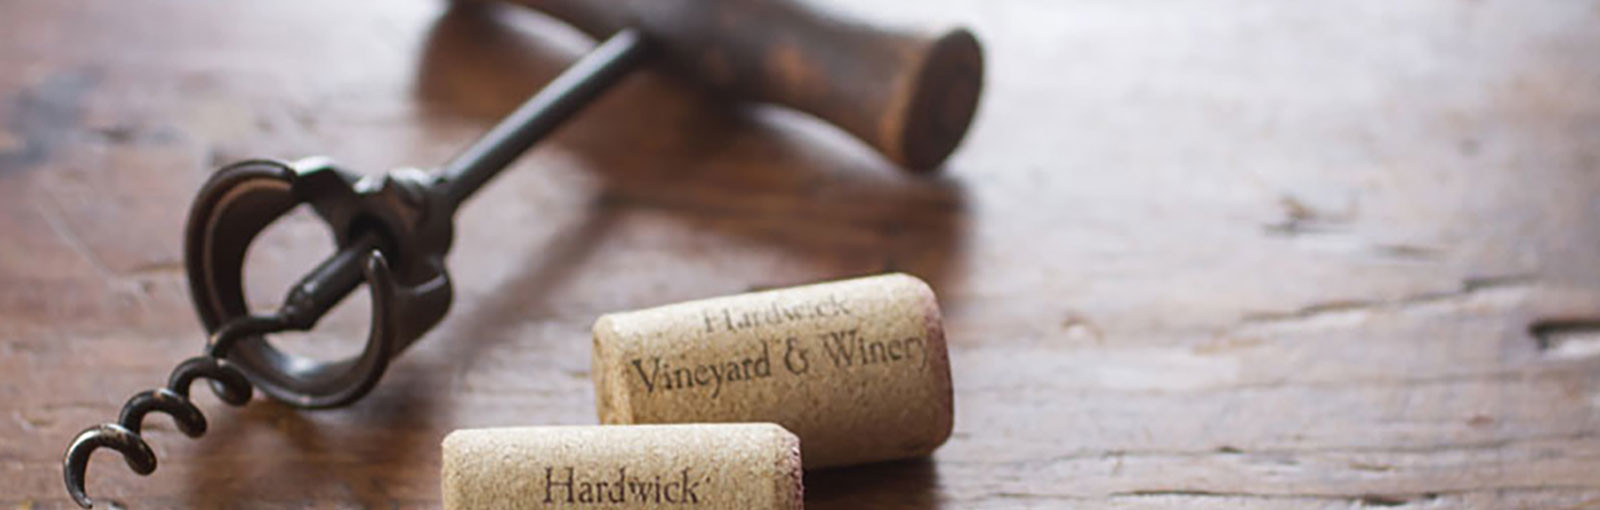 Hardwick Vineyard & Winery